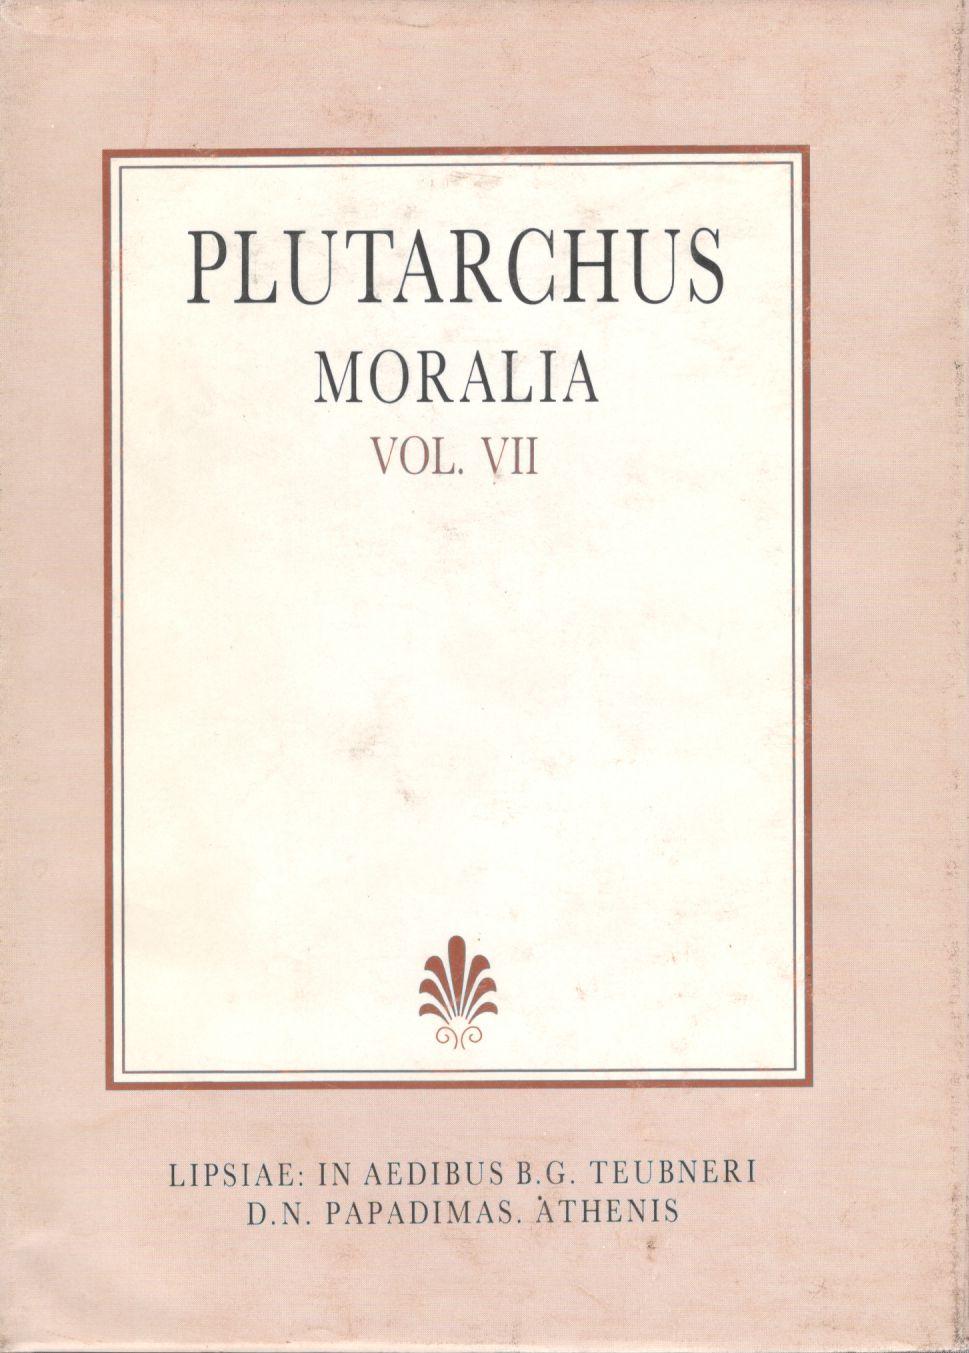 Plutarchi, Moralia, Vol. VII, [Πλουτάρχου, Ηθικά, τ. Ζ']